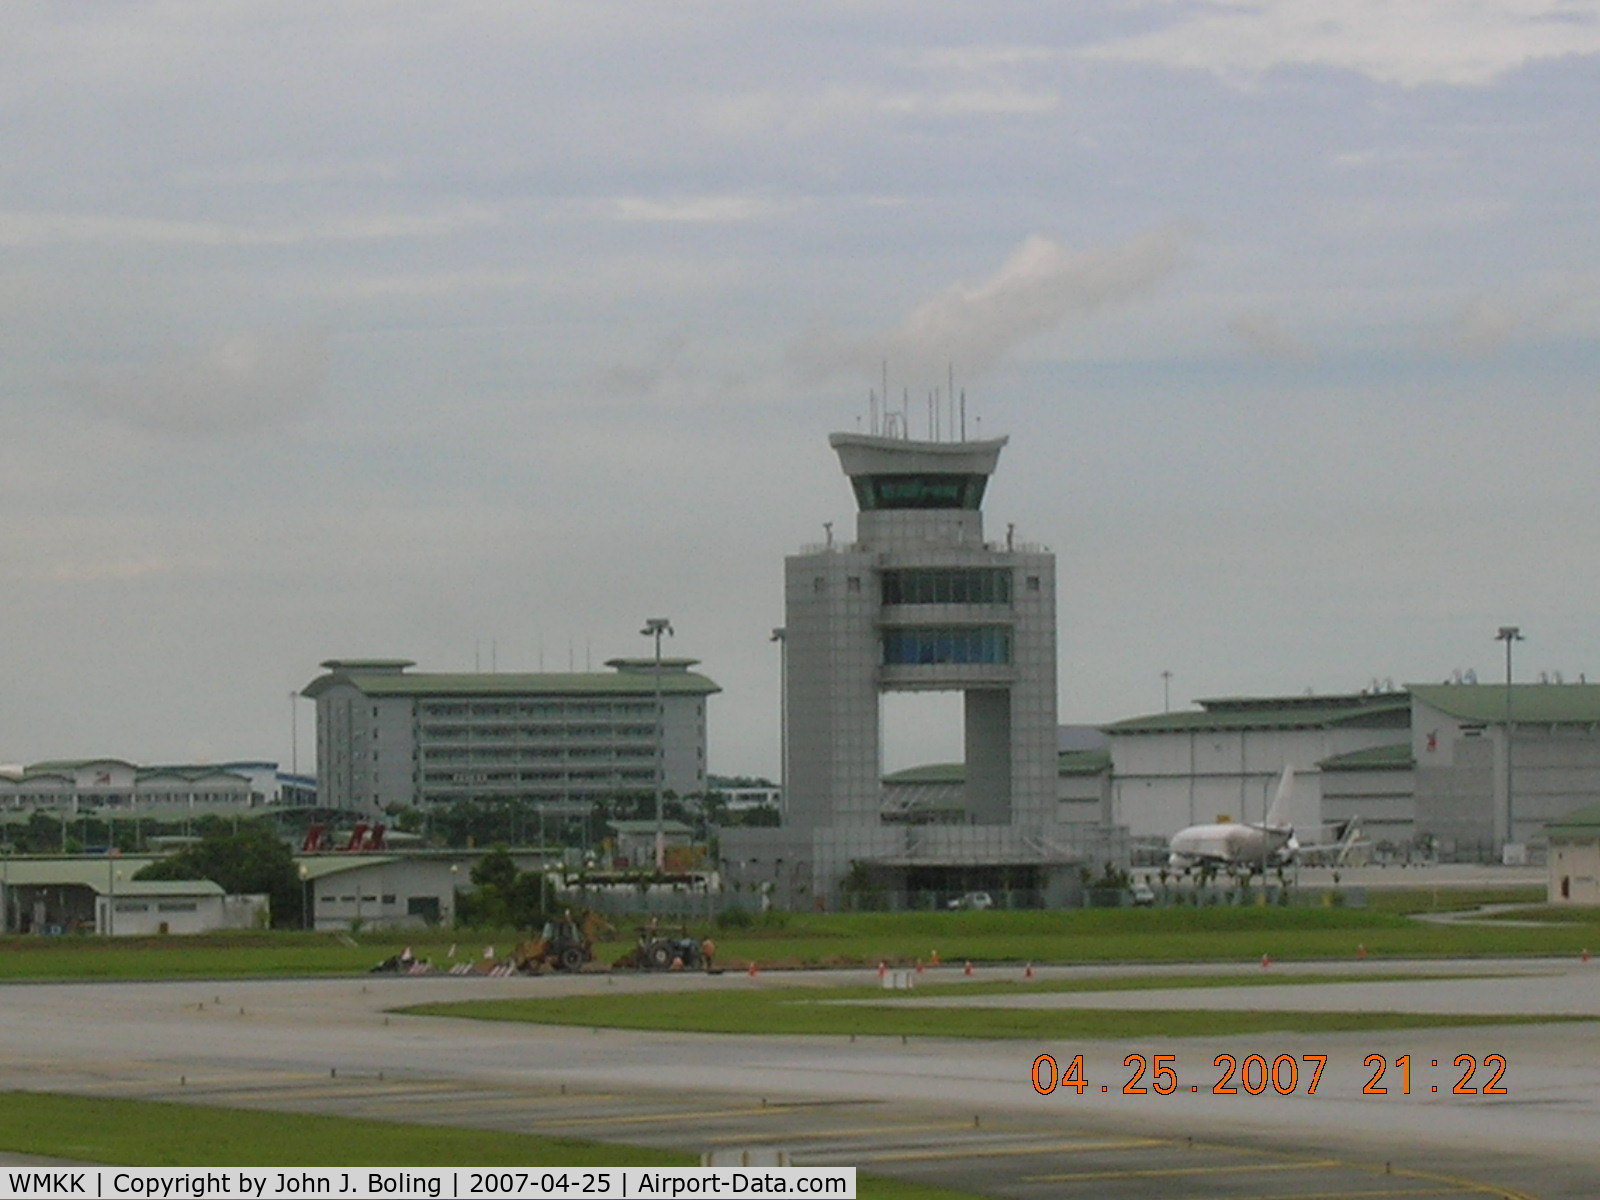 Kuala Lumpur International Airport, Sepang, Selangor Malaysia (WMKK) - Control Tower at Kuala Lumpur, Malaysia